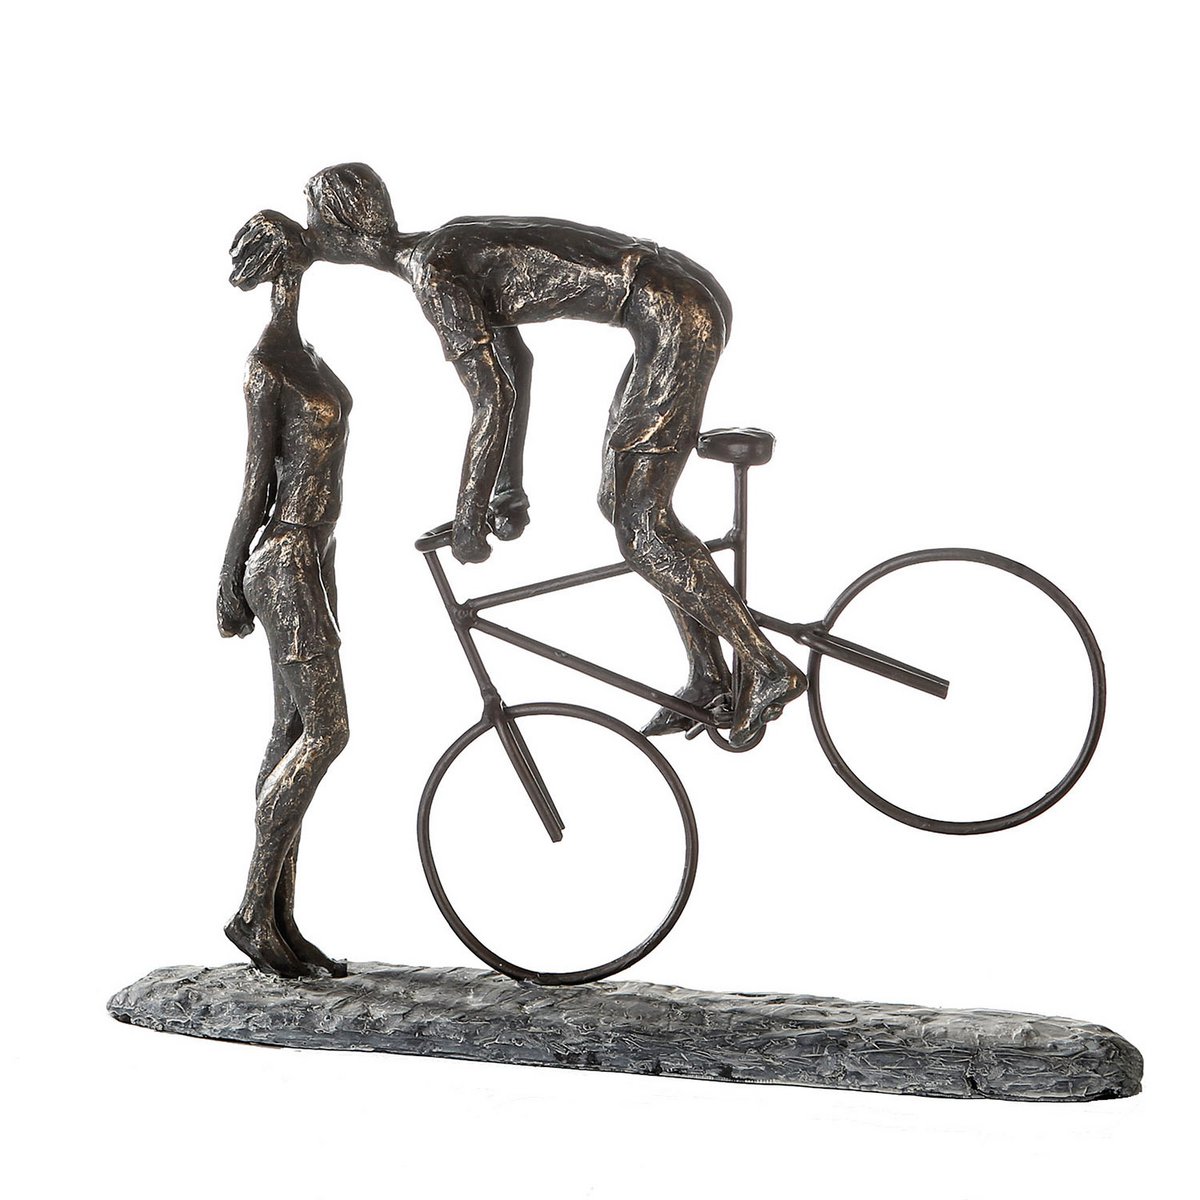 Poly Skulptur "Kiss me" bronzefarben